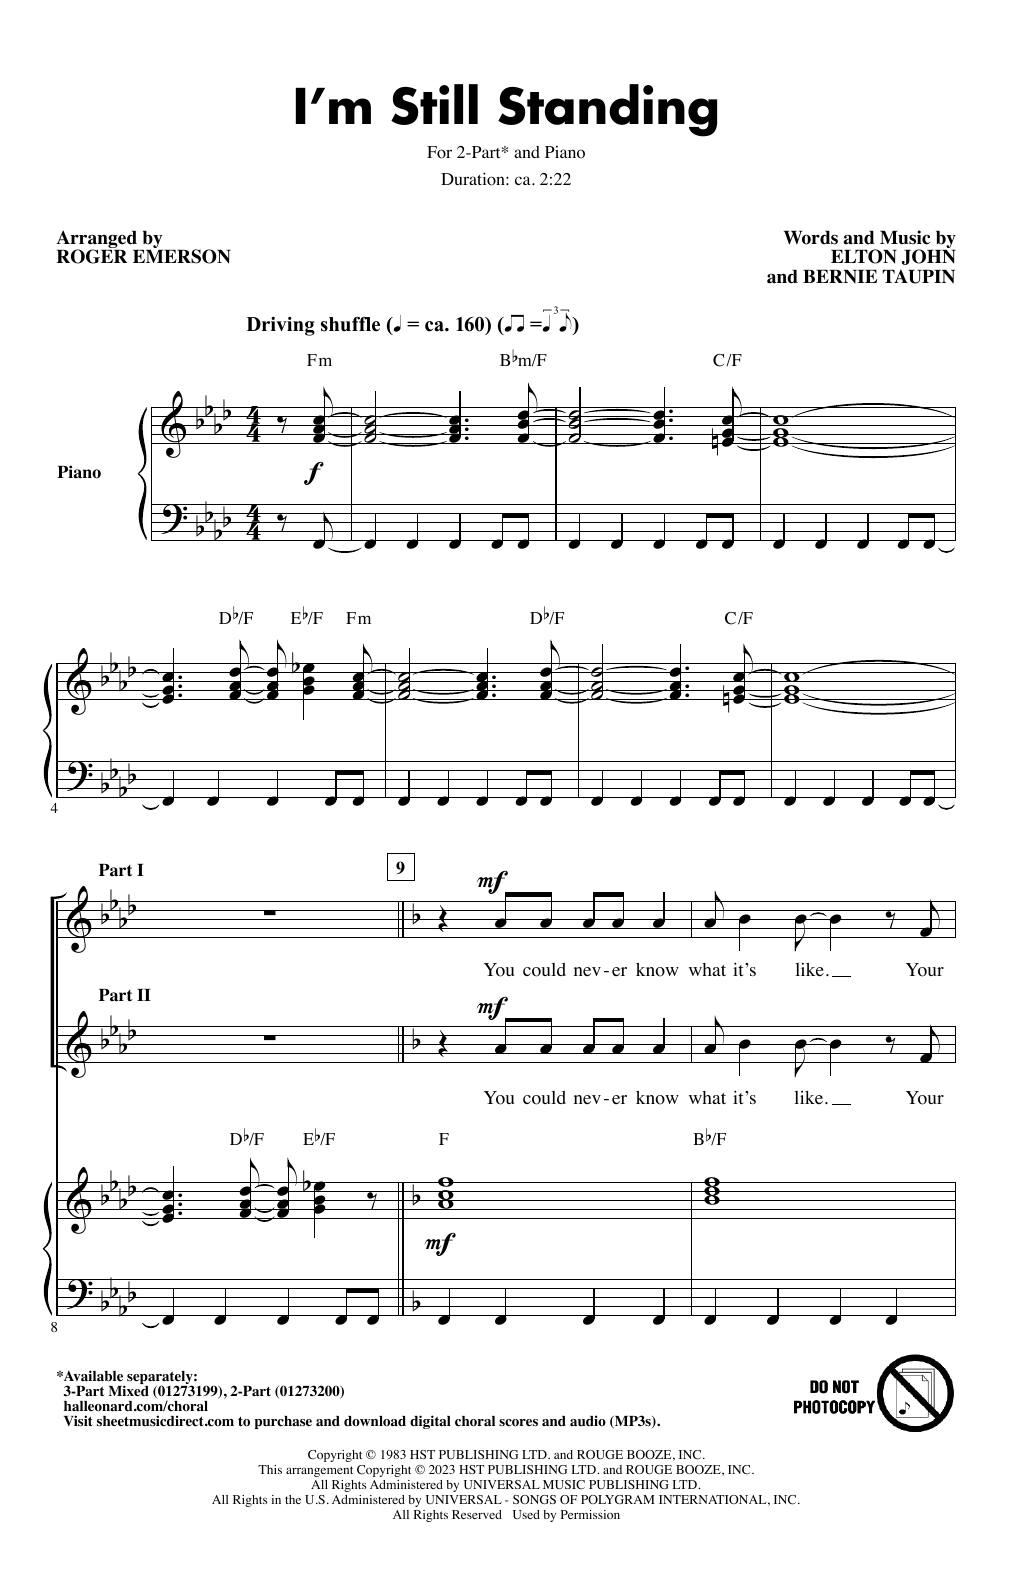 Elton John I'm Still Standing (arr. Roger Emerson) Sheet Music Notes & Chords for 2-Part Choir - Download or Print PDF